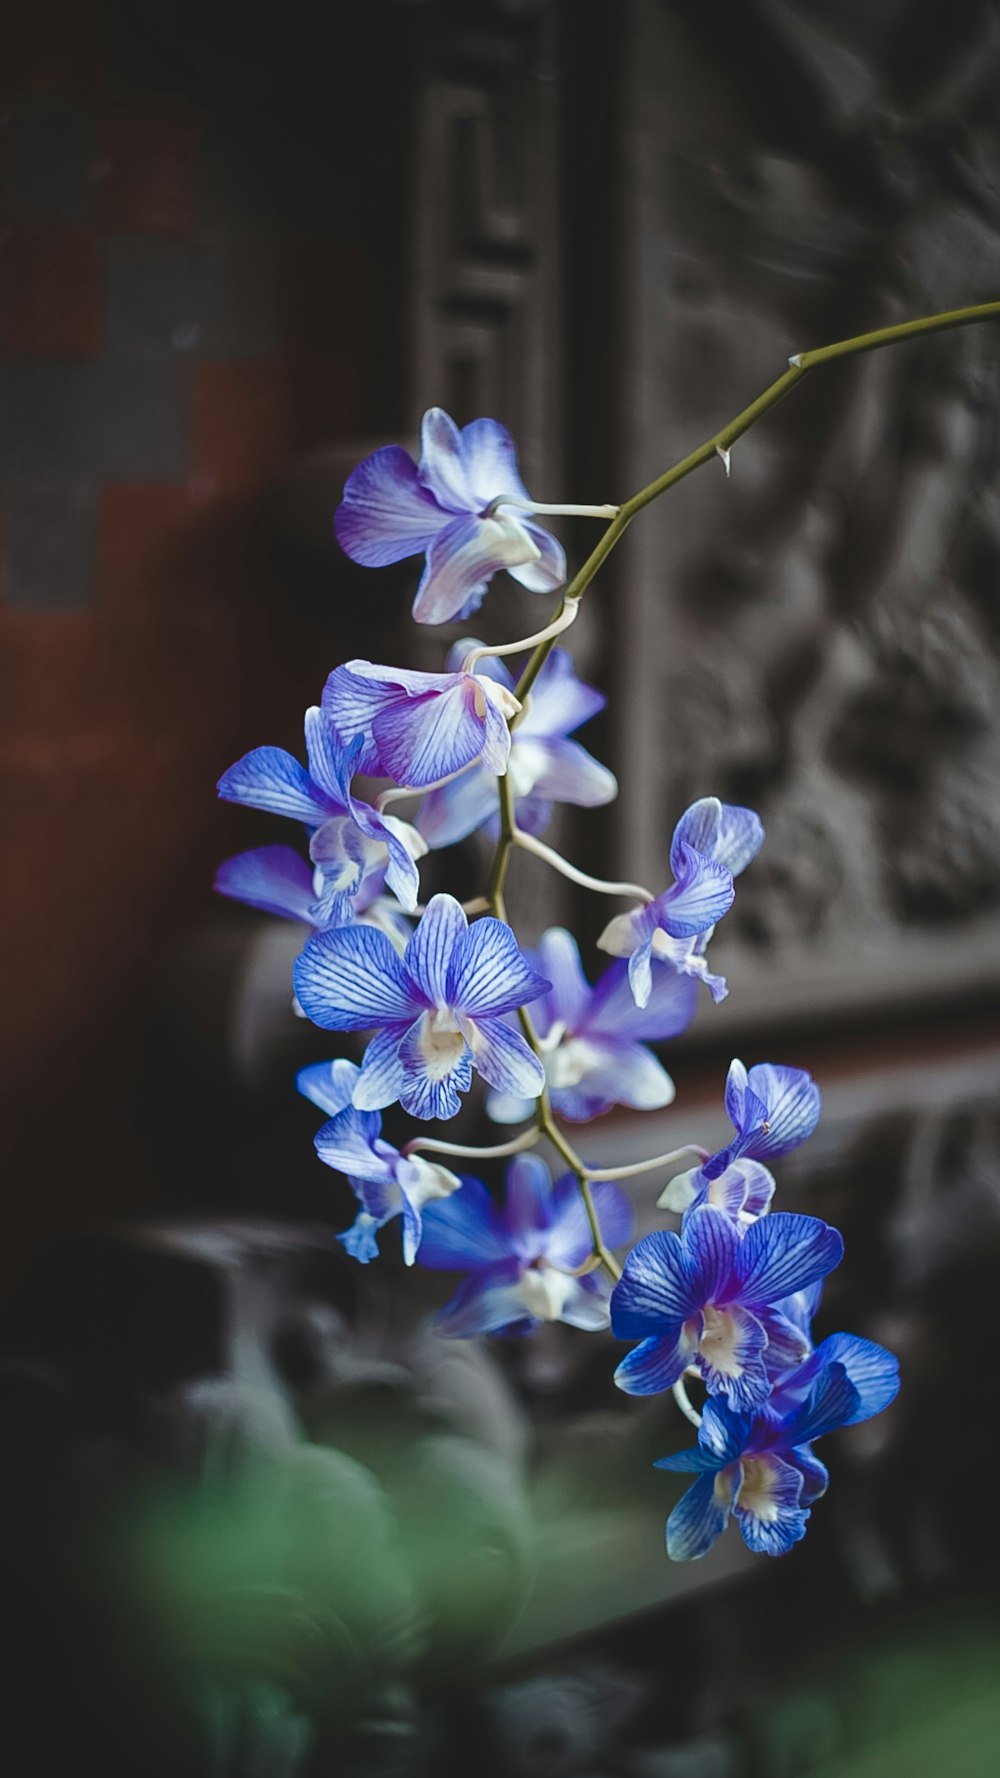 Blue and white flowers in tilt shift lens photo – Free Bali Image ...